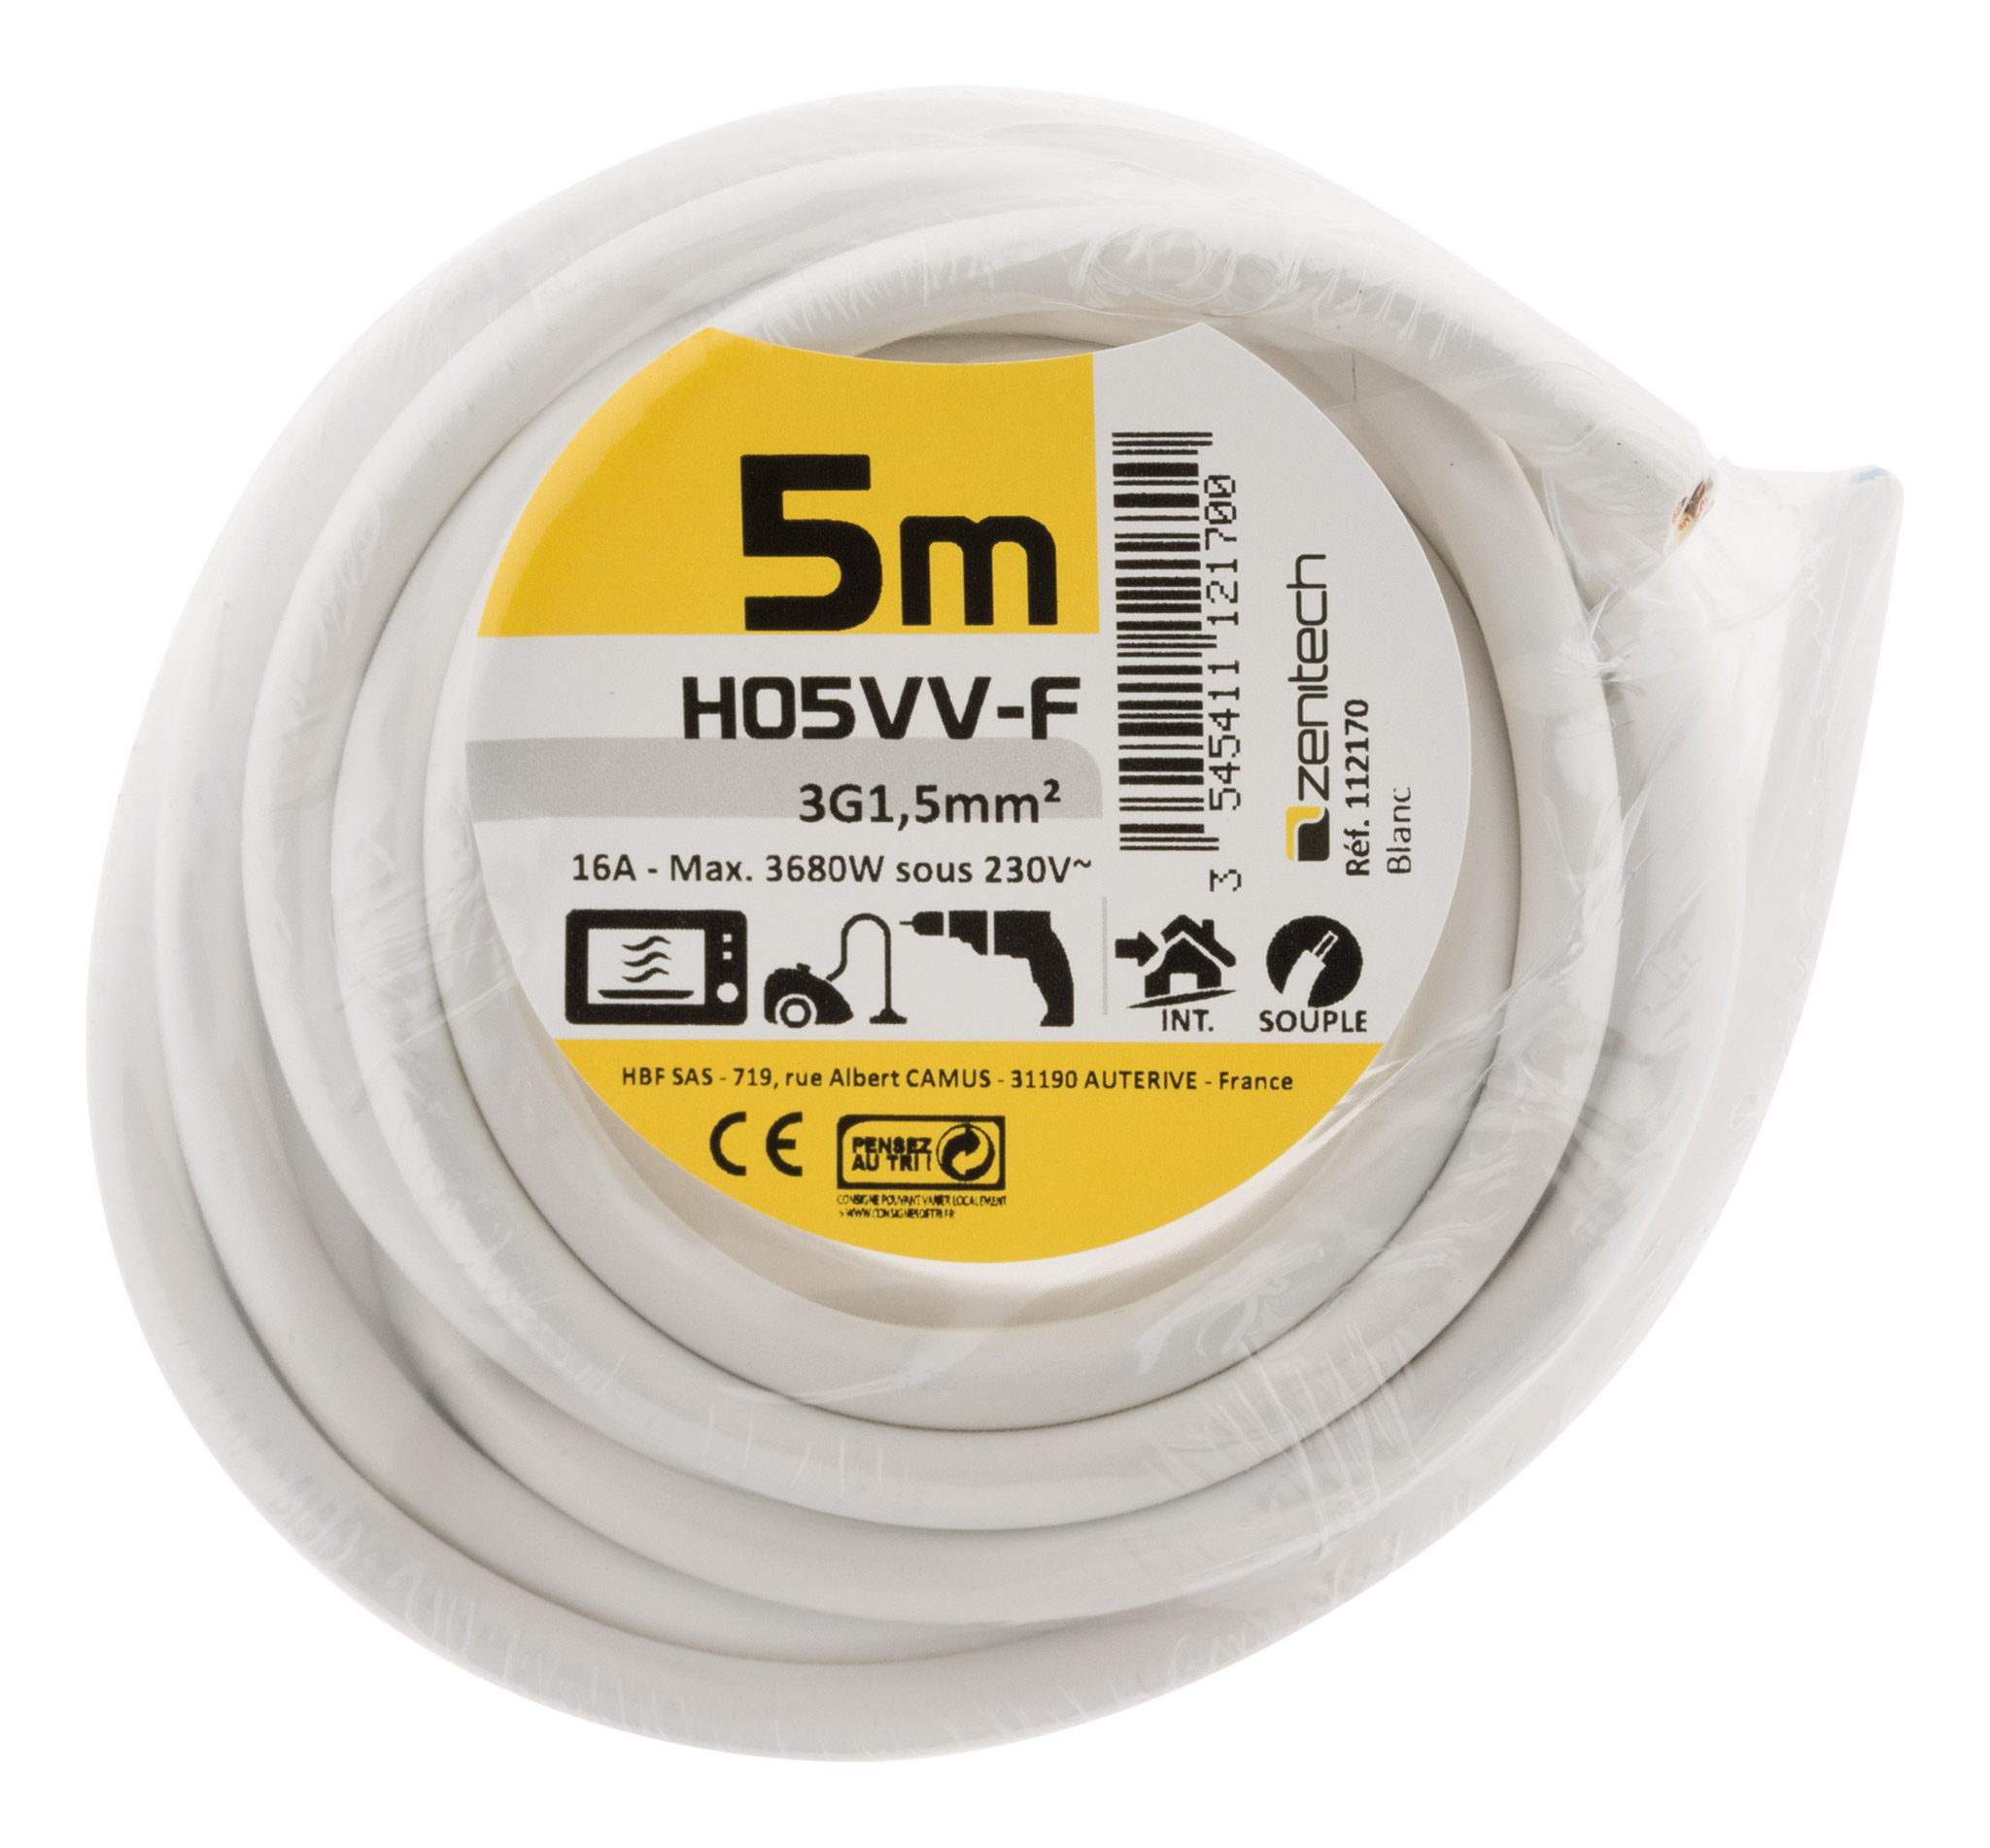 Cable ho5vvf 3x1.5 blanc 5m - plasto - INOTECH